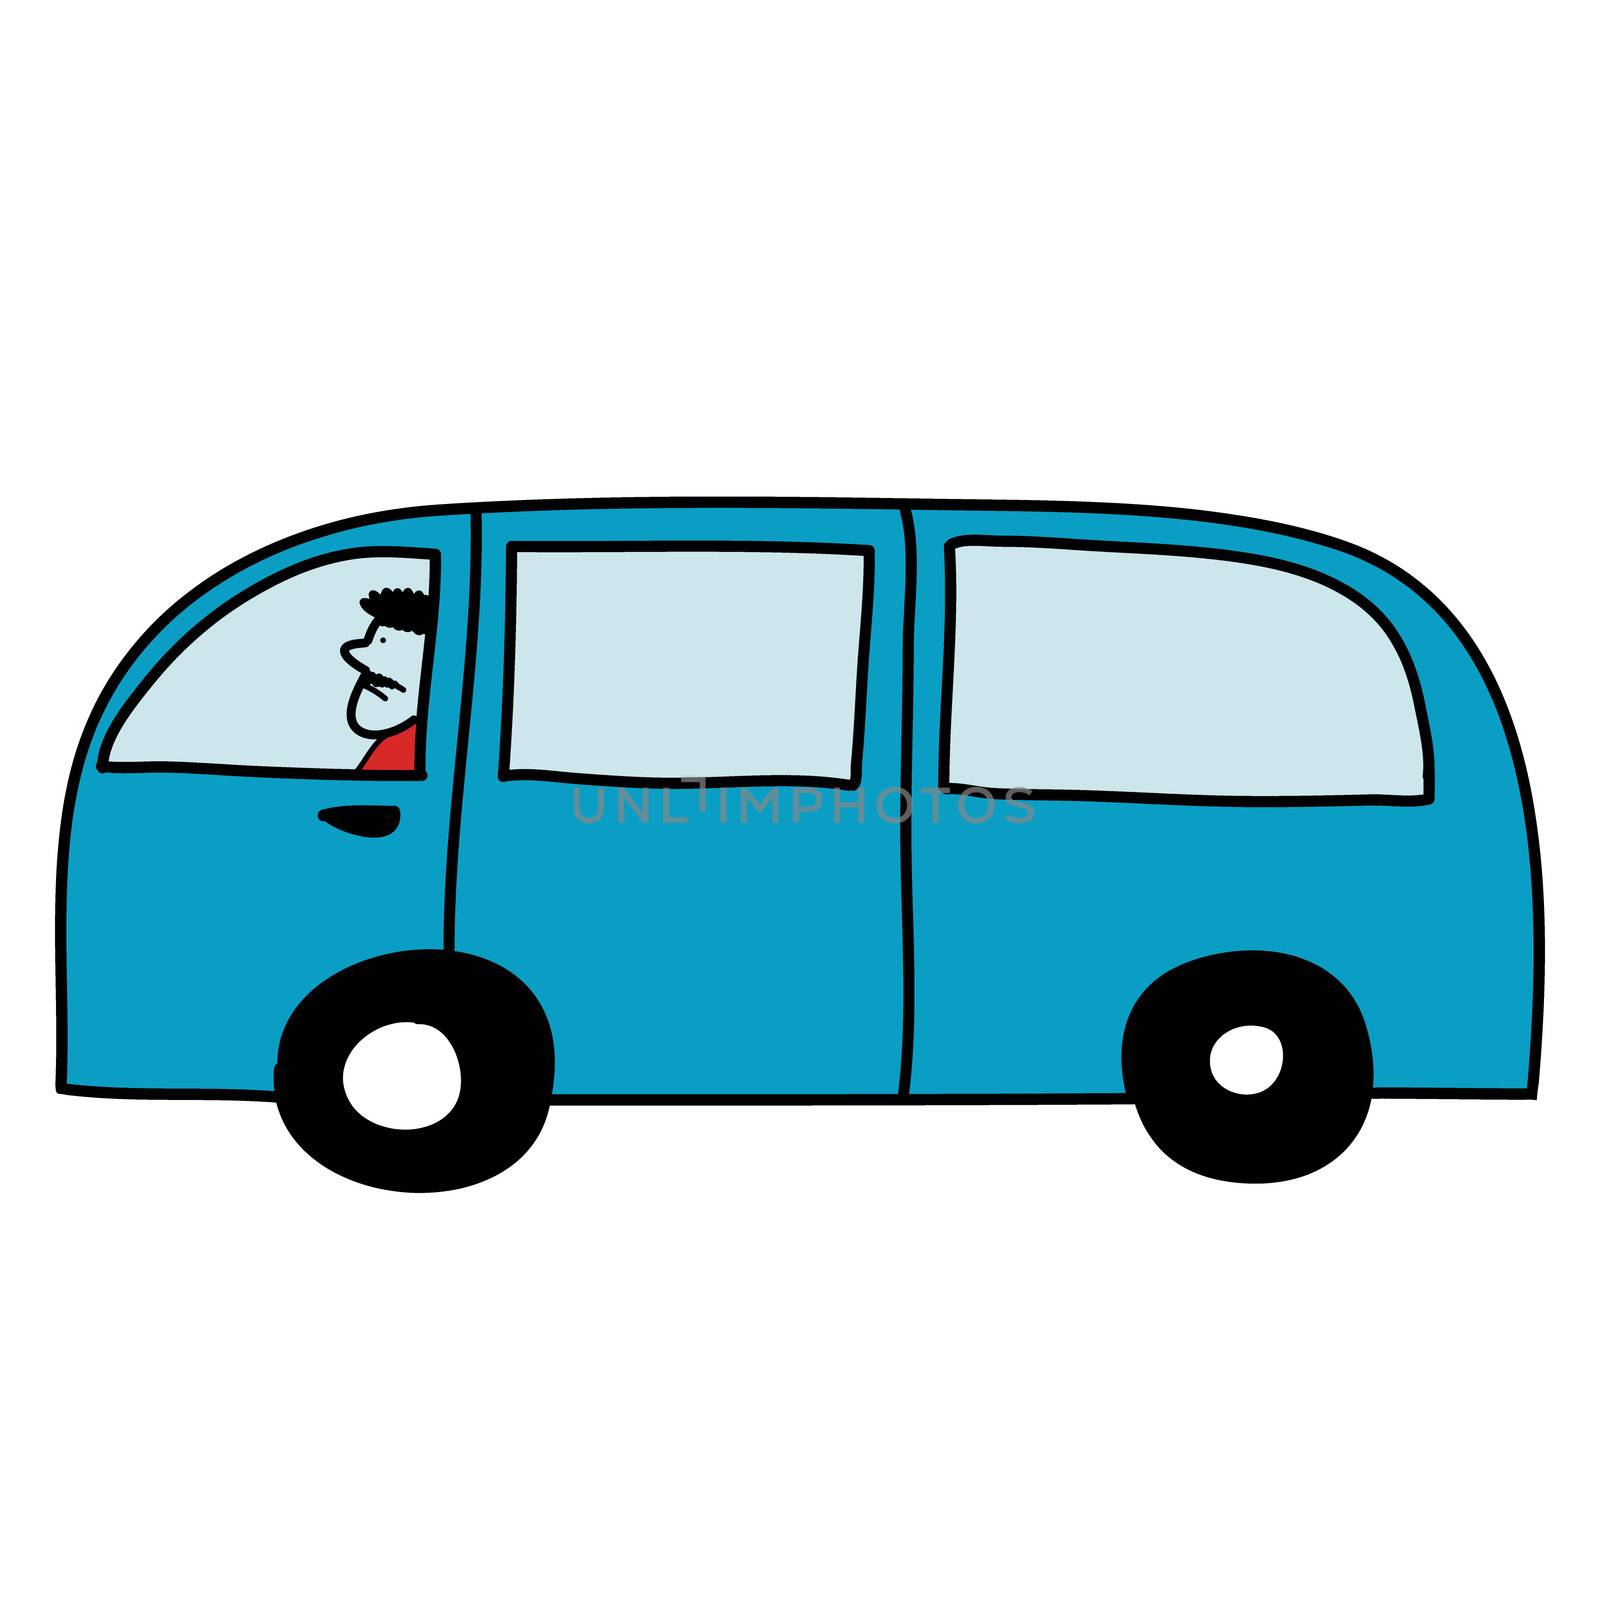 Van with driver by jukurae